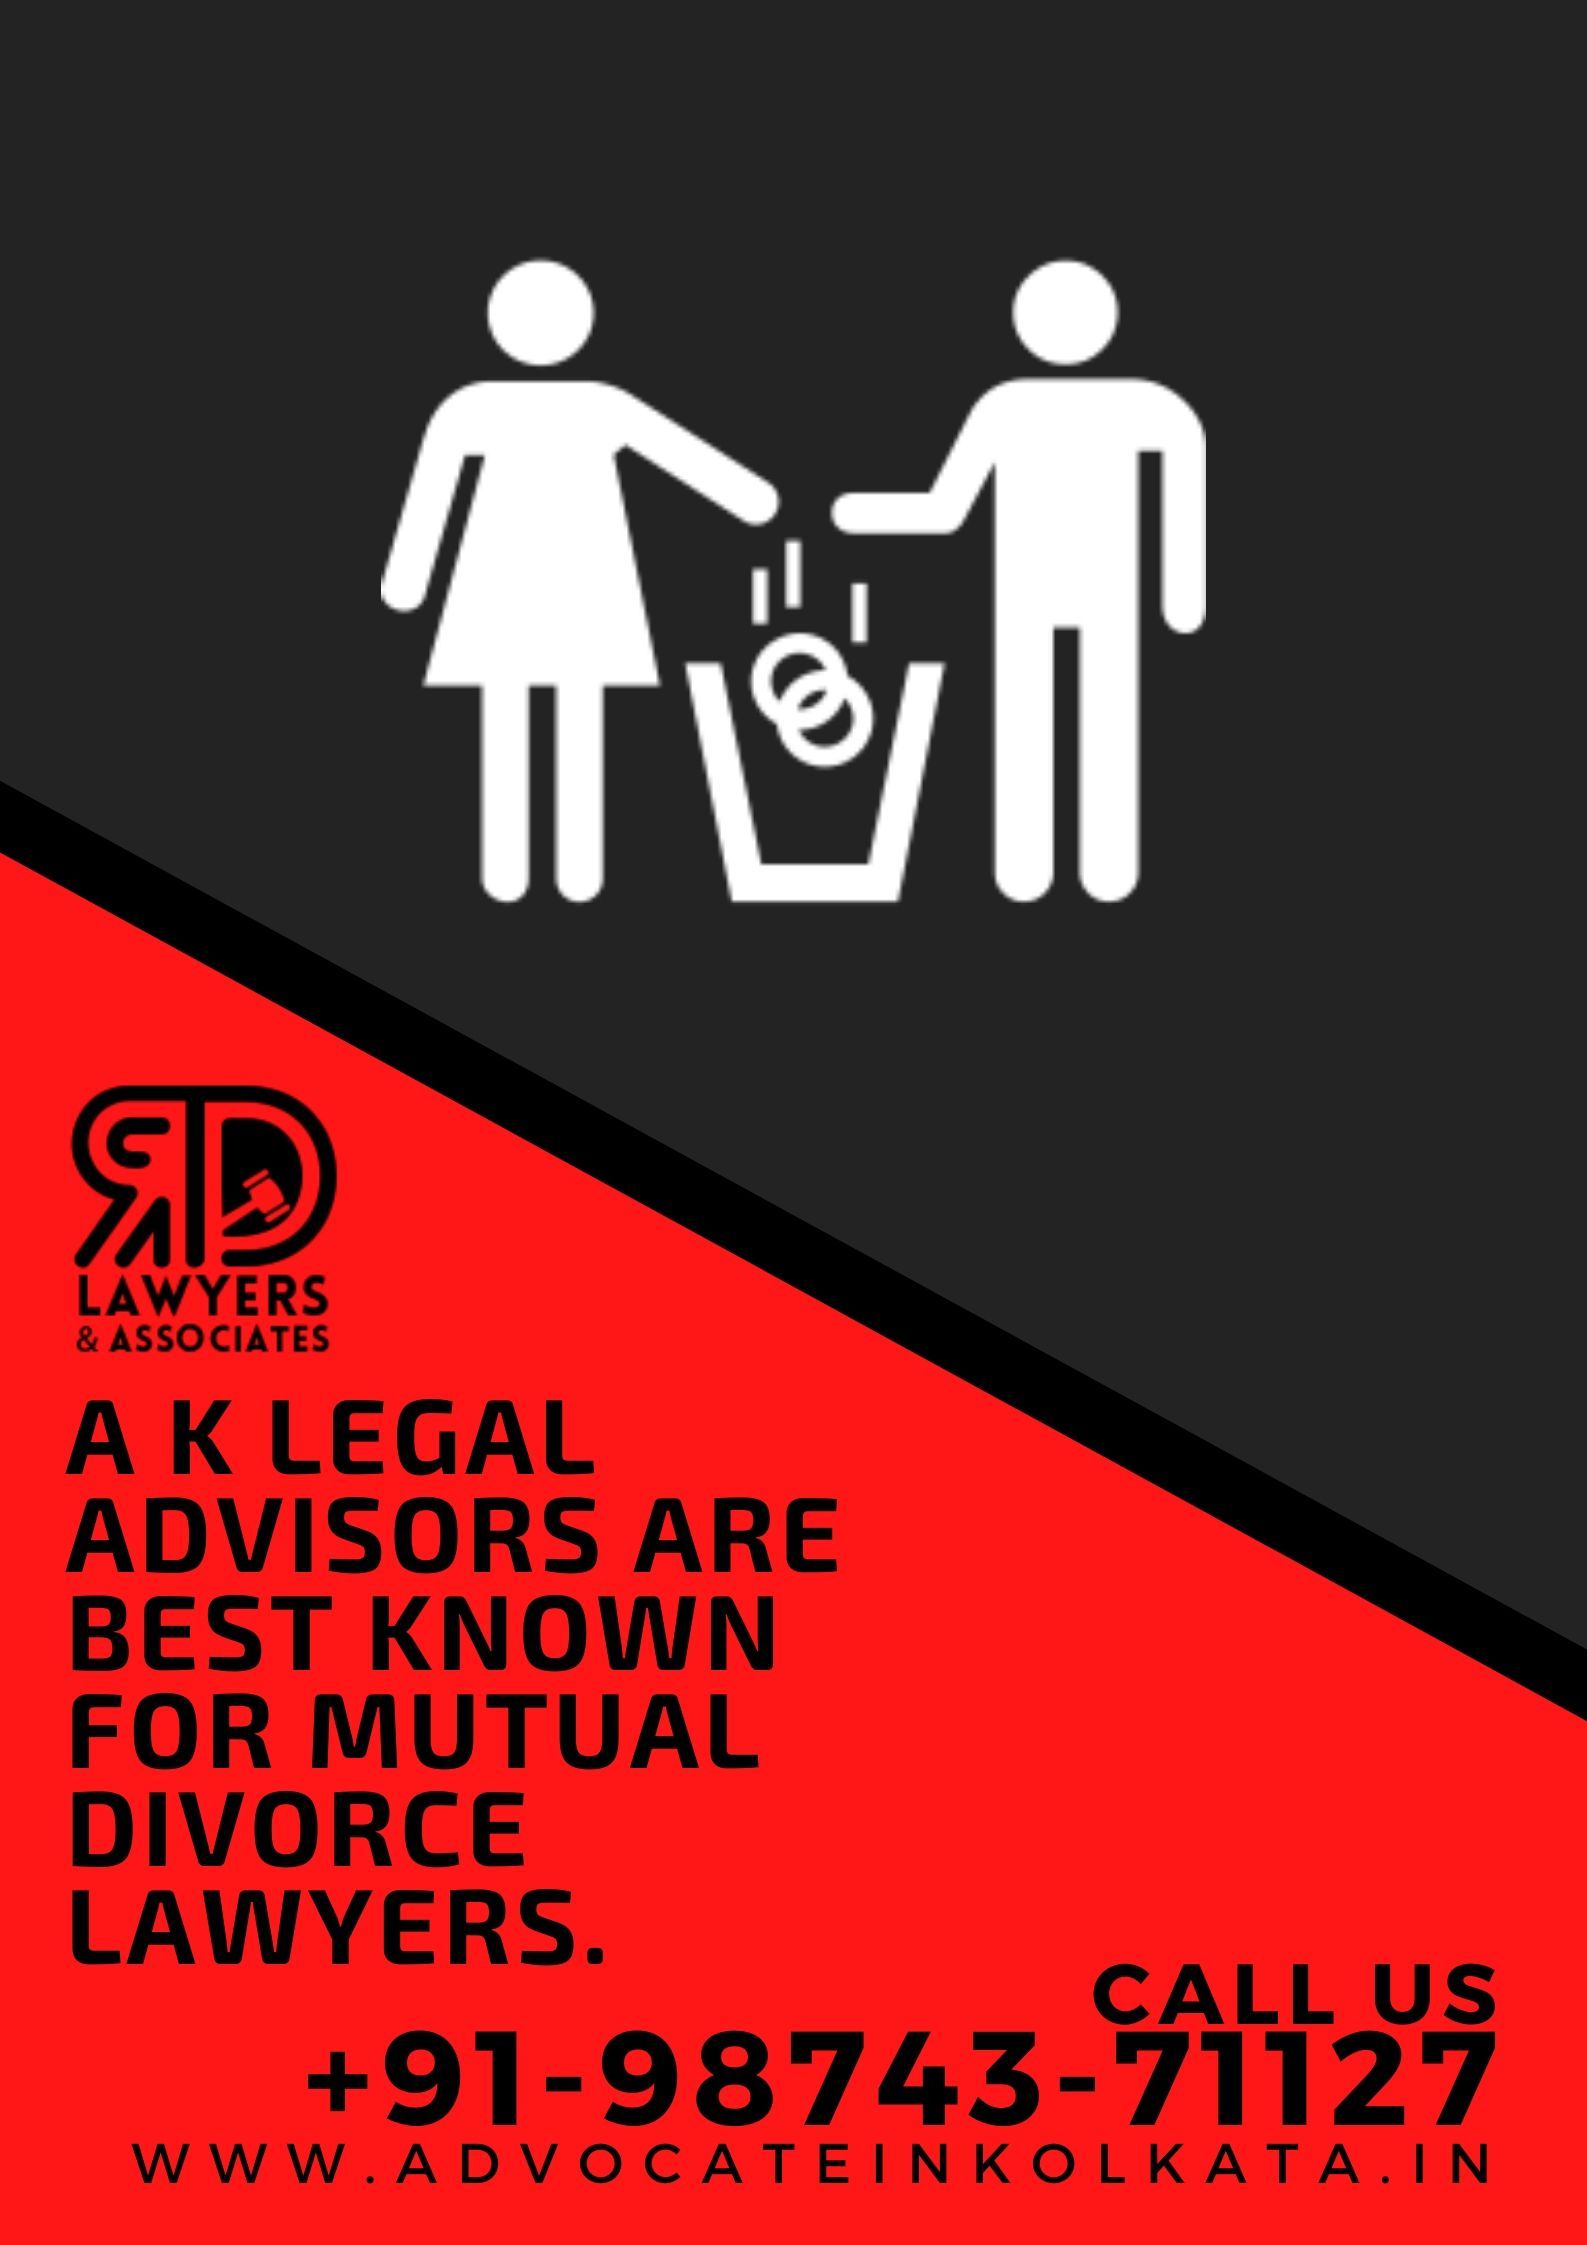 Mutual Divorce Law & Mutual Divorce Lawyer in kolkata Advocate Shilpi Das & AK Legal Advisors